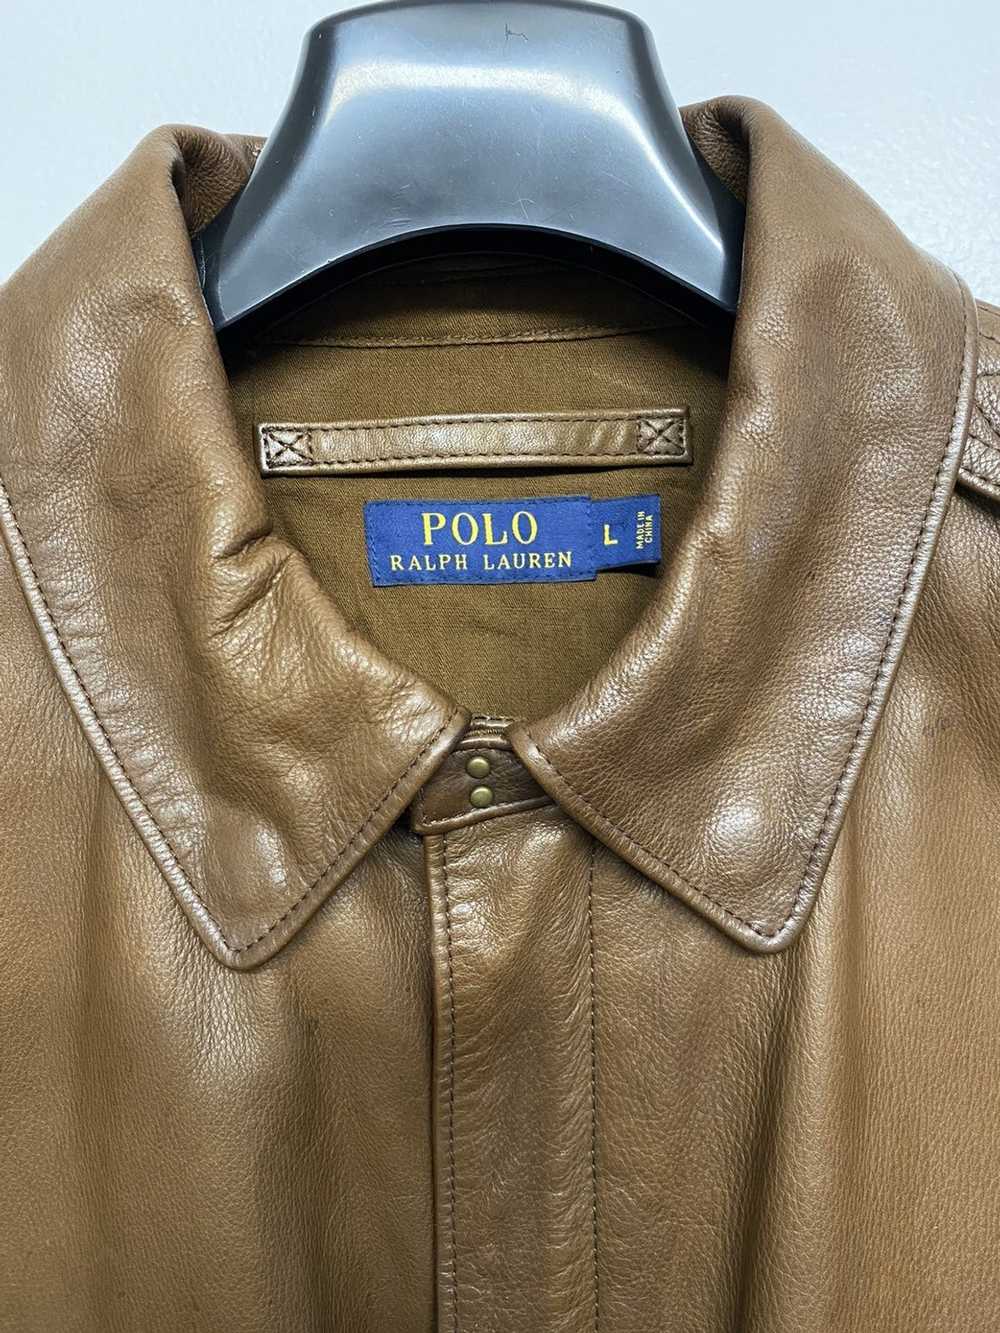 Polo Ralph Lauren Ralph Lauren Polo A2 Brown Leat… - image 3